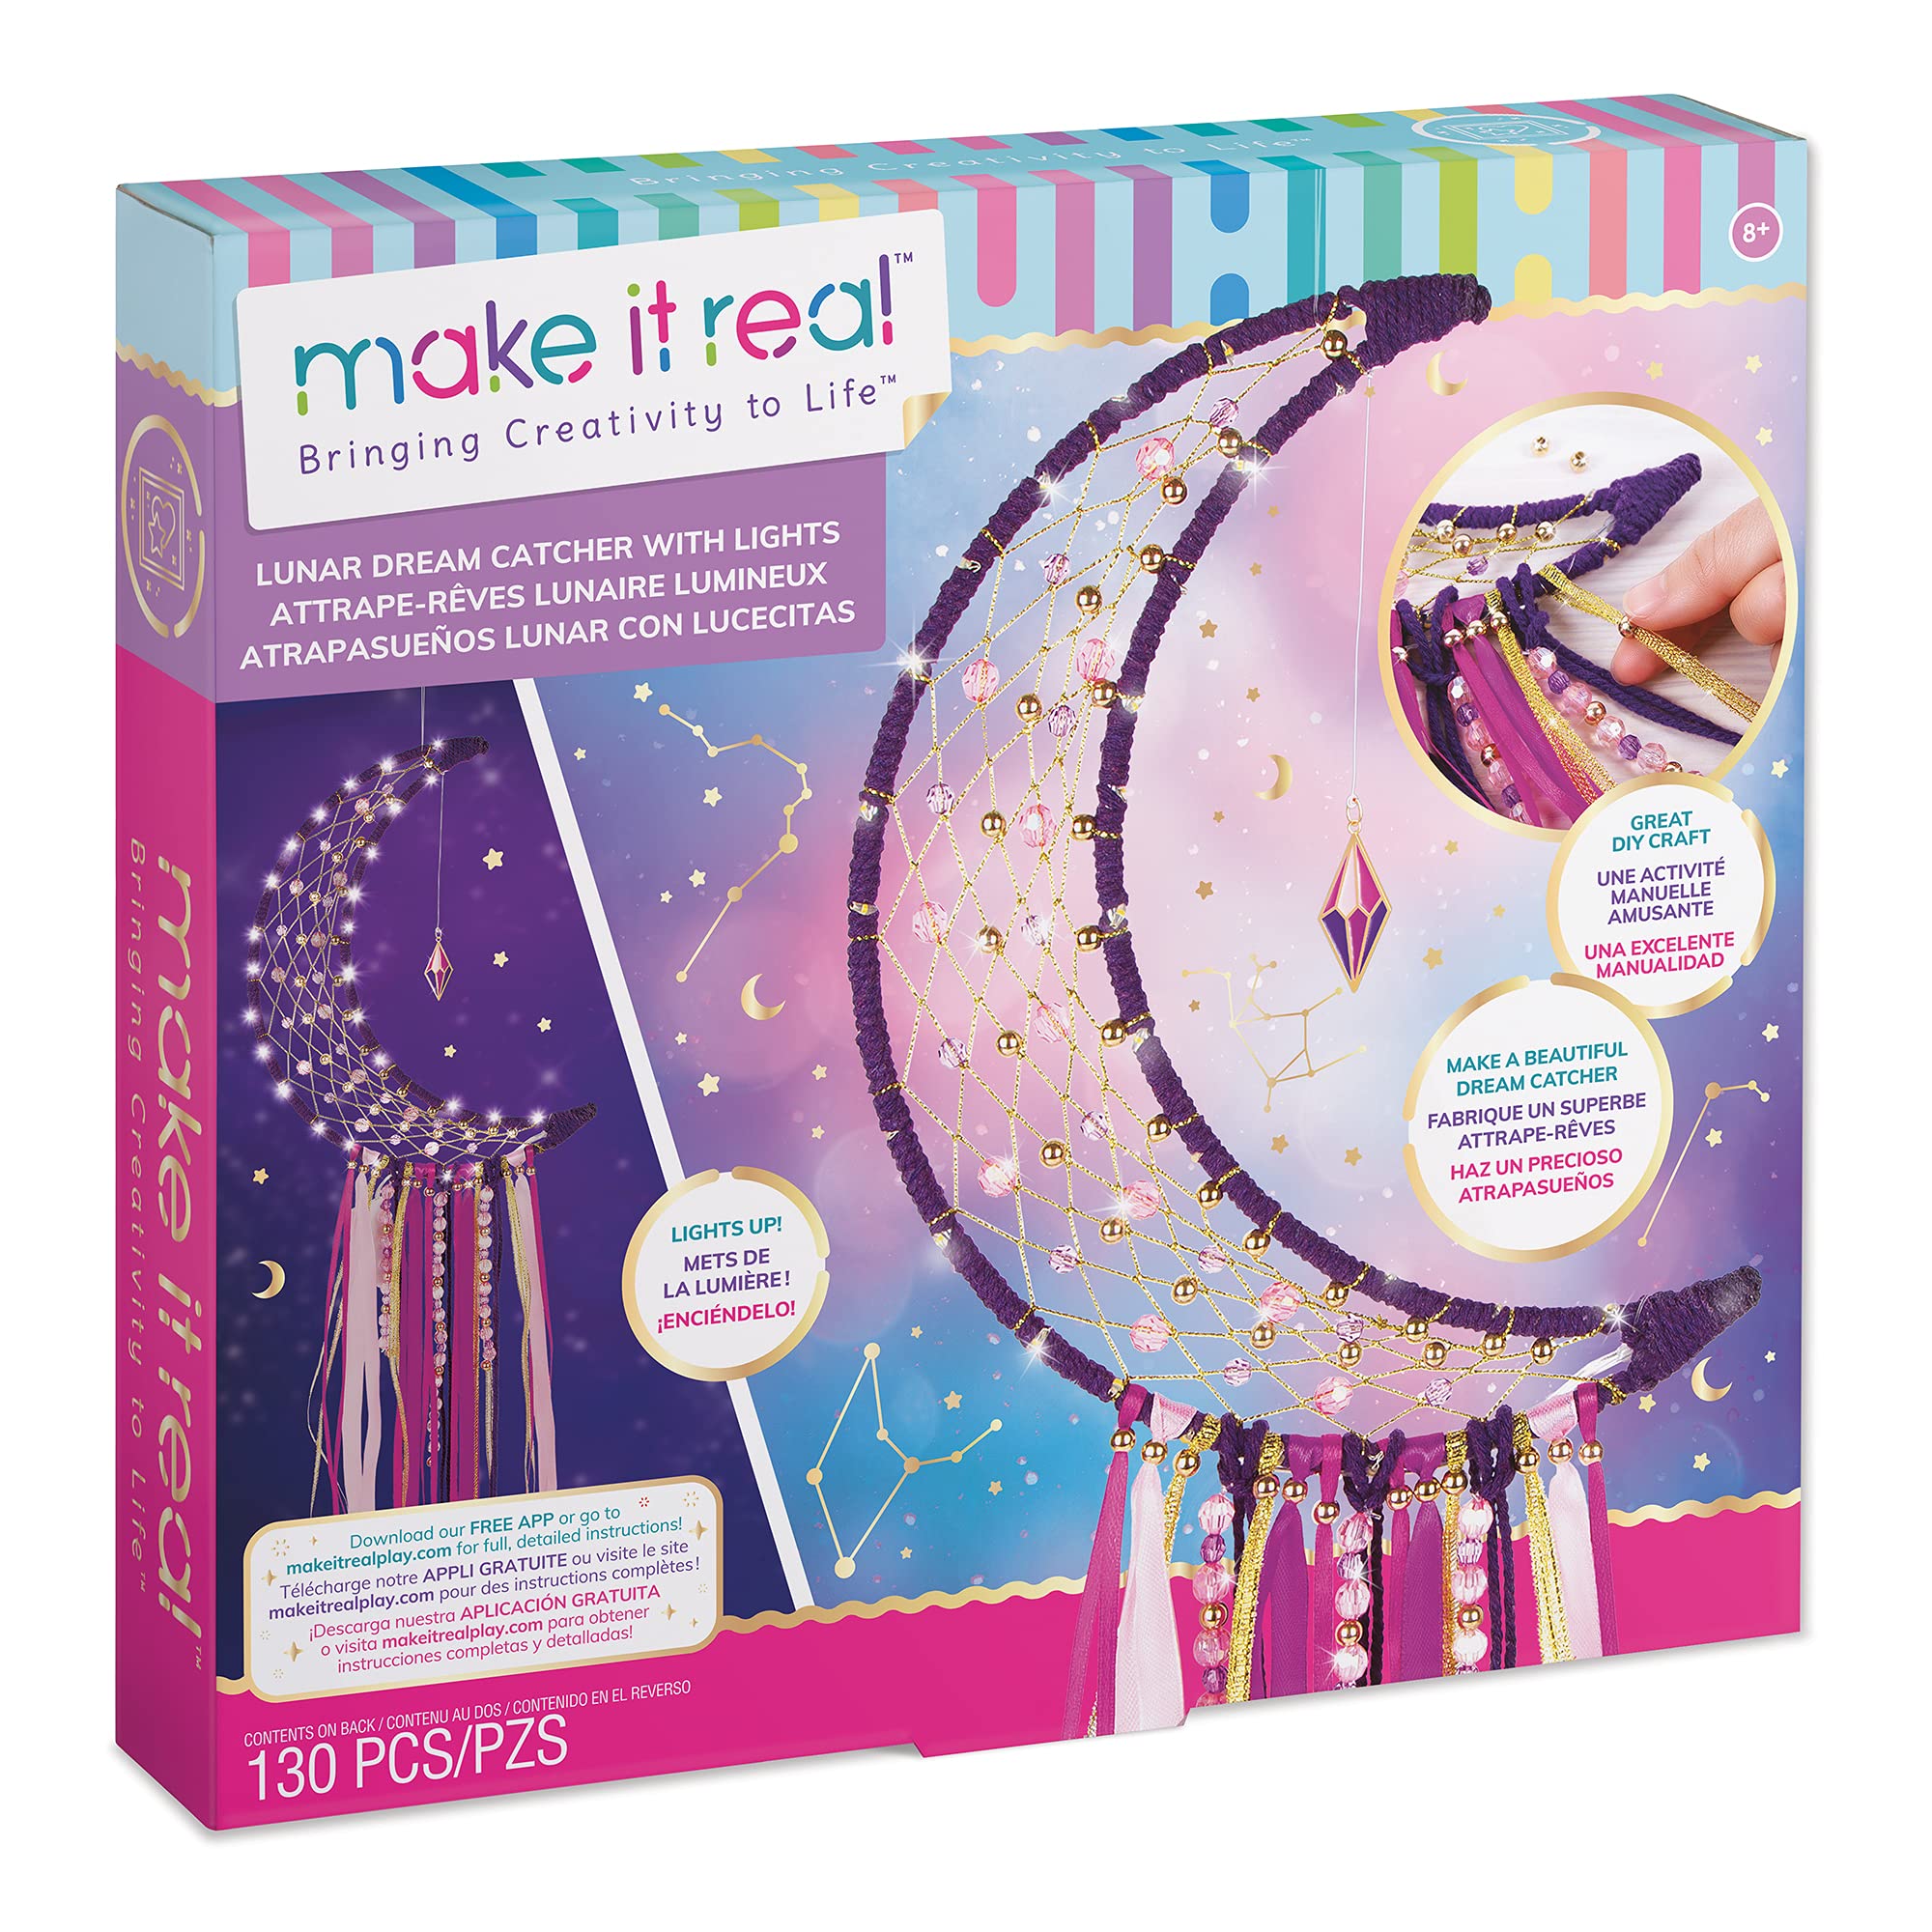 Make It Real - Lunar Dream Catcher with Lights - DIY Dream Catcher Kit for Kids - Teen Room Wall Decor Dream Catcher with Fairy Lights - Ages 8+